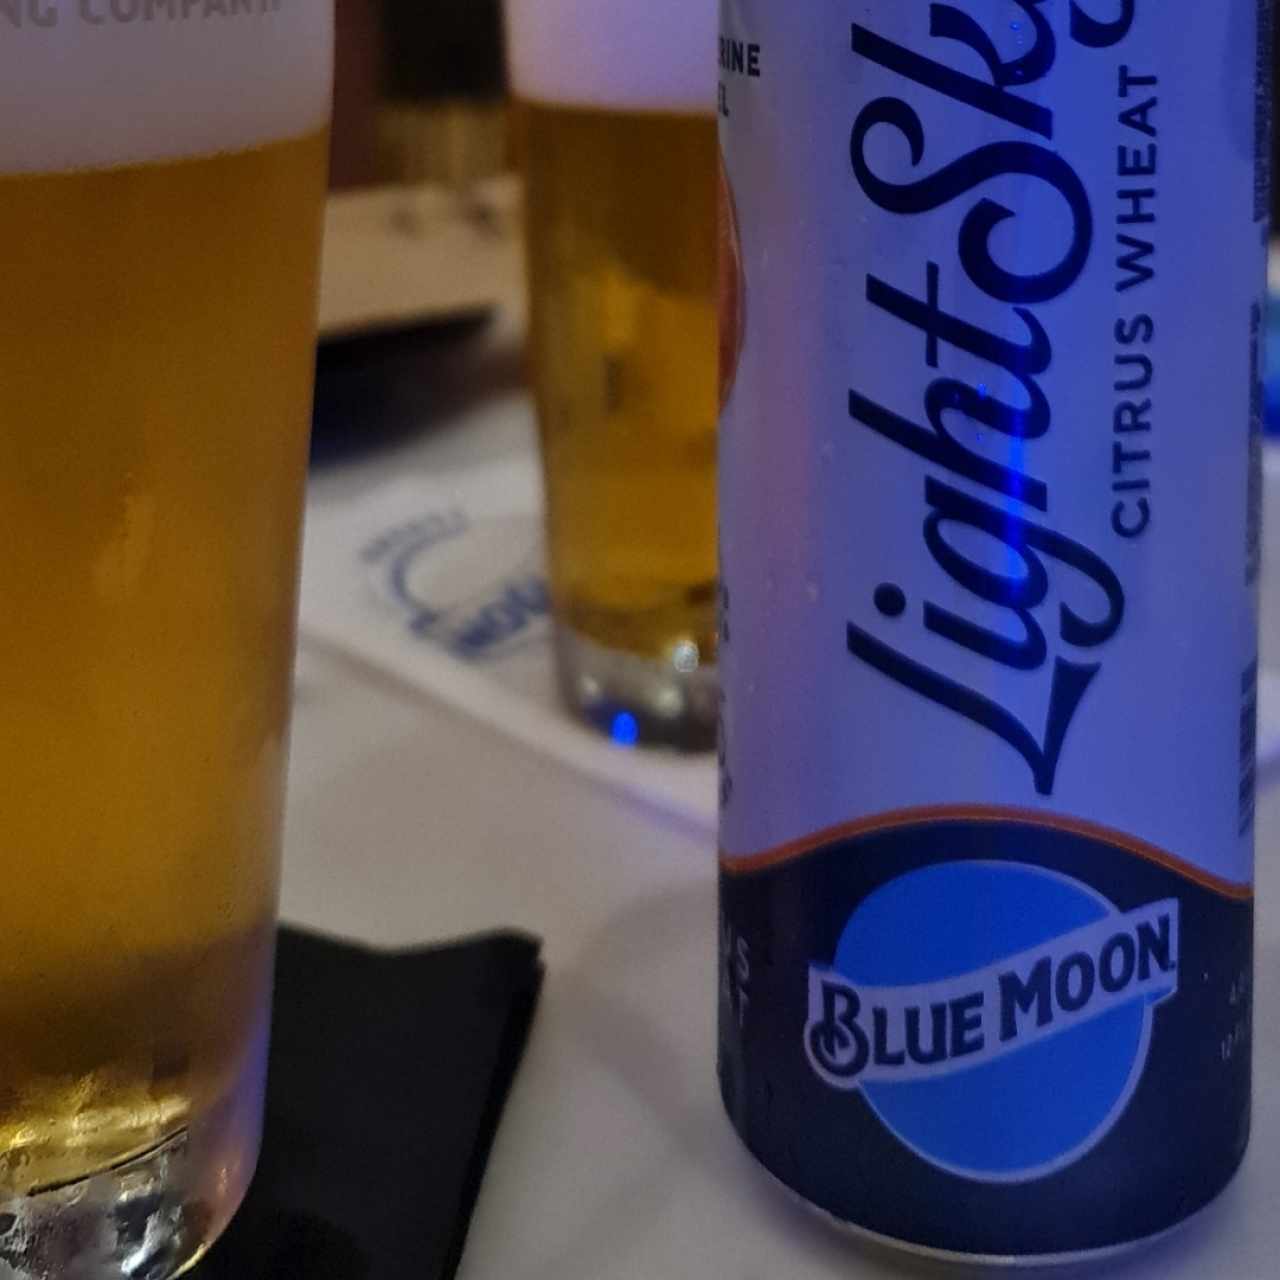 blue moon